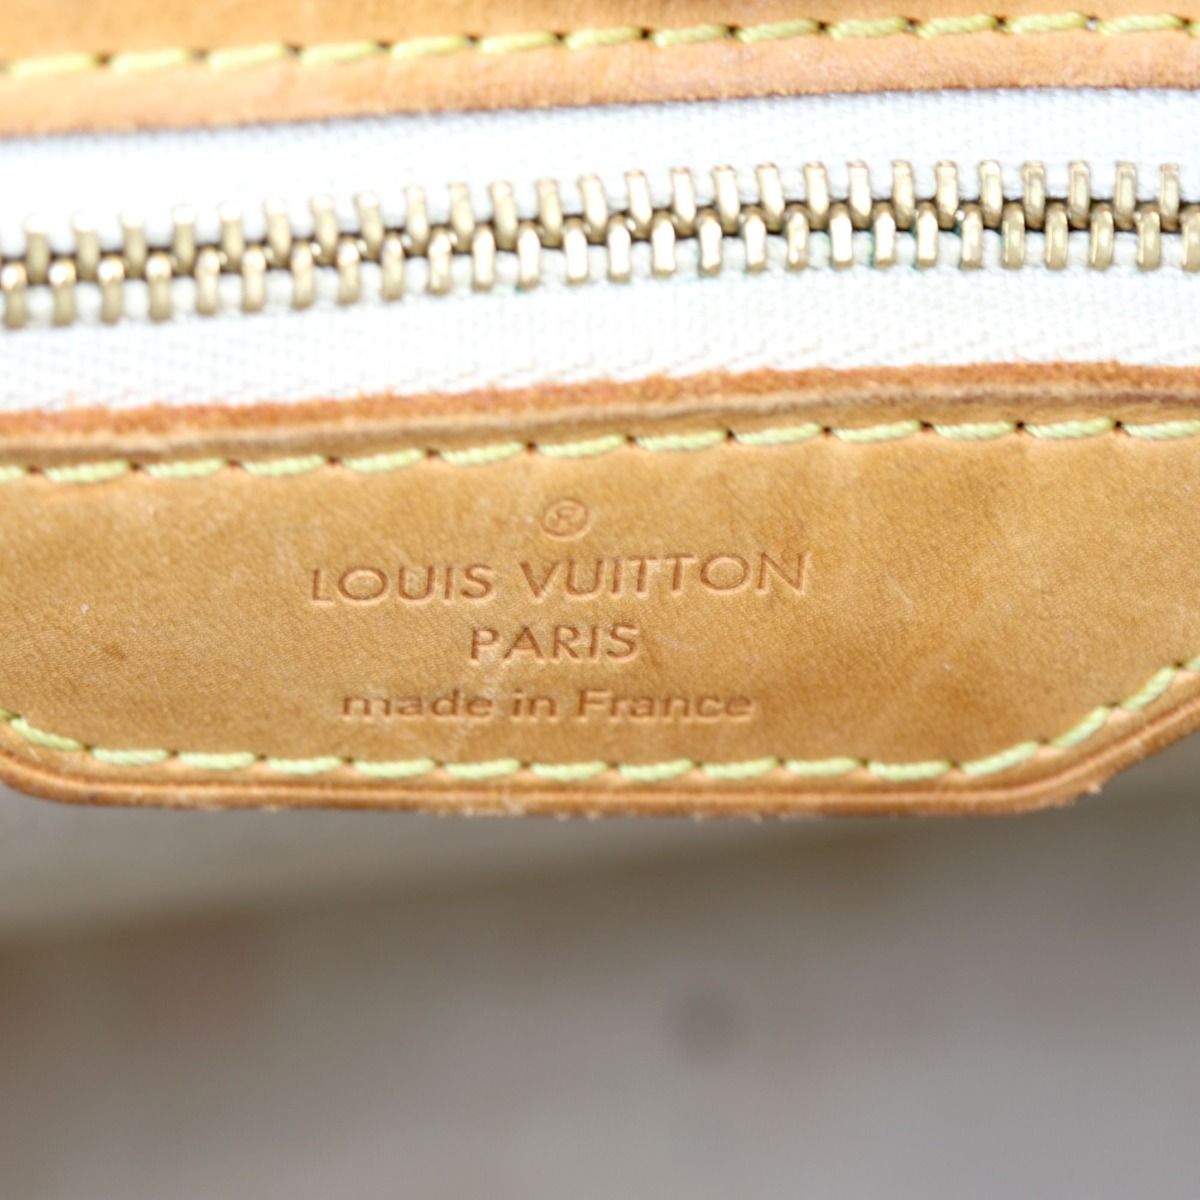 Louis Vuitton Rose Angelique Vernis mm Brea Bag Gold Hardware, 2013 (Very Good)